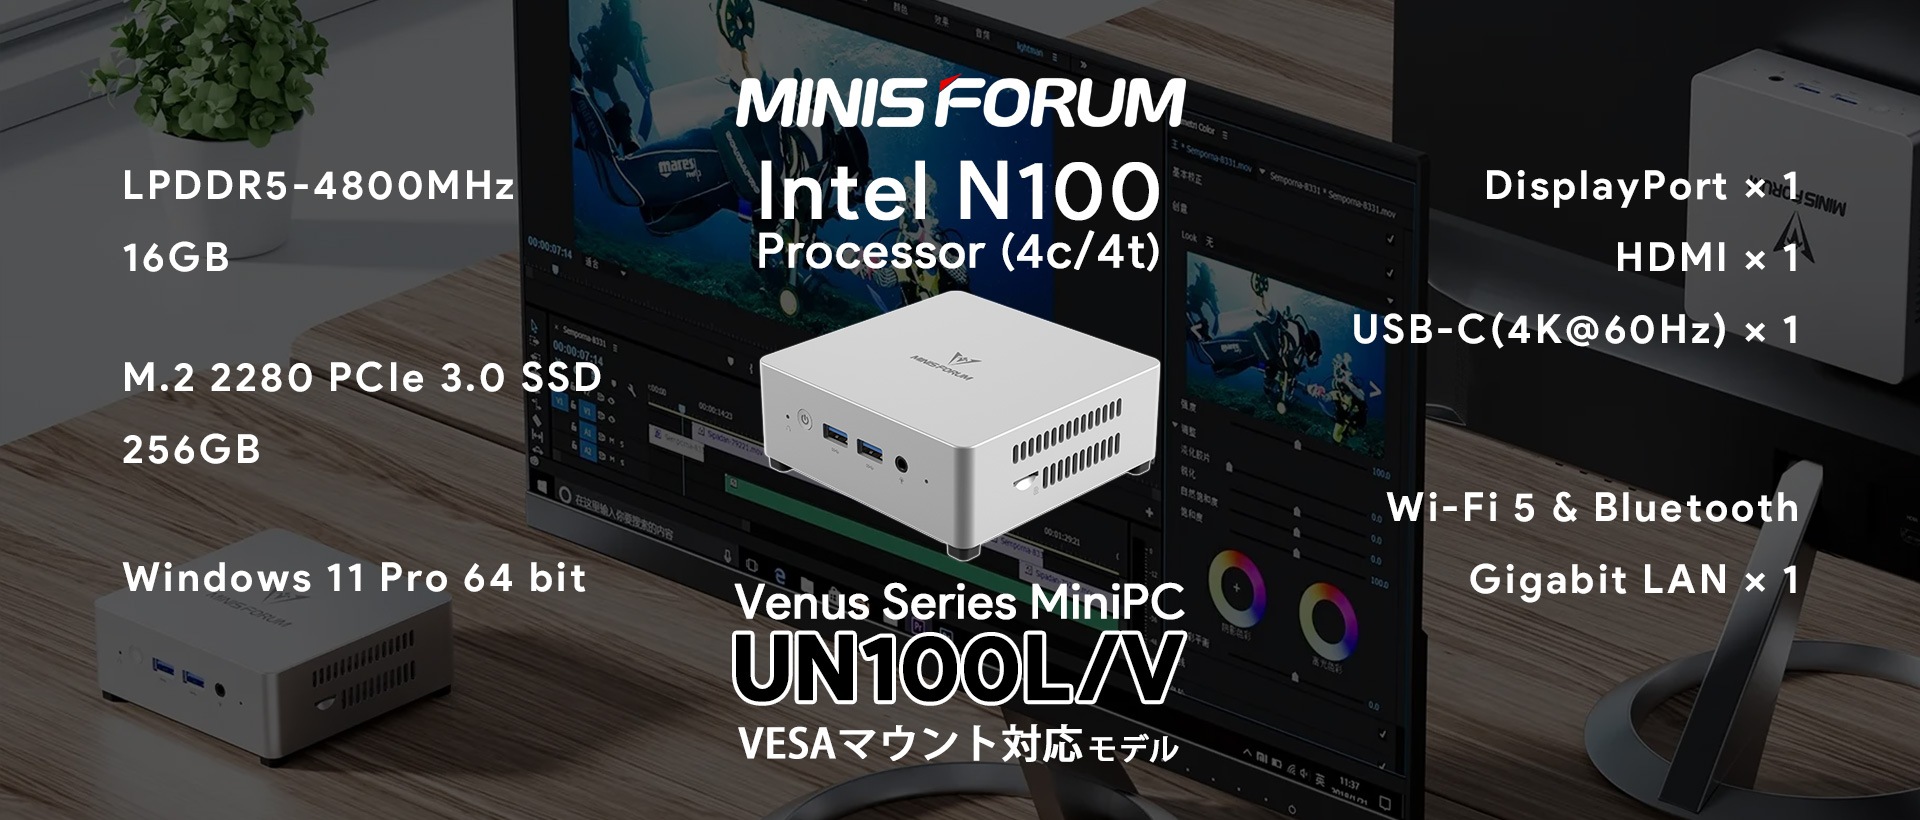 Intel Processor N100搭載 コストパフォーマンスに優れたミニPC UN100L/V-16/256-W11Pro(N100) VESA対応モデル